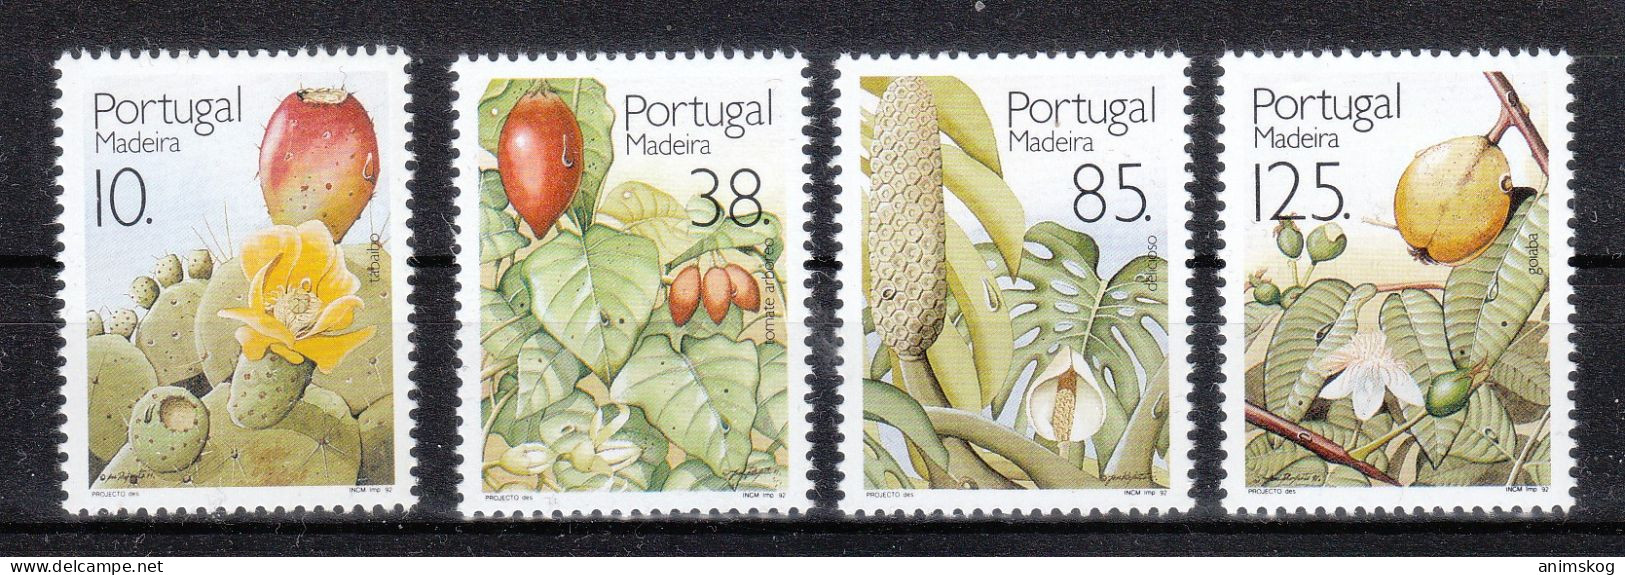 Portugal-Madeira 1992**, Subtrop. Früchte+Pflanzen, Kaktus Opuntia / Portugal-Madeira 1992, MNH, Subtr. Fruits+Plants - Cactus